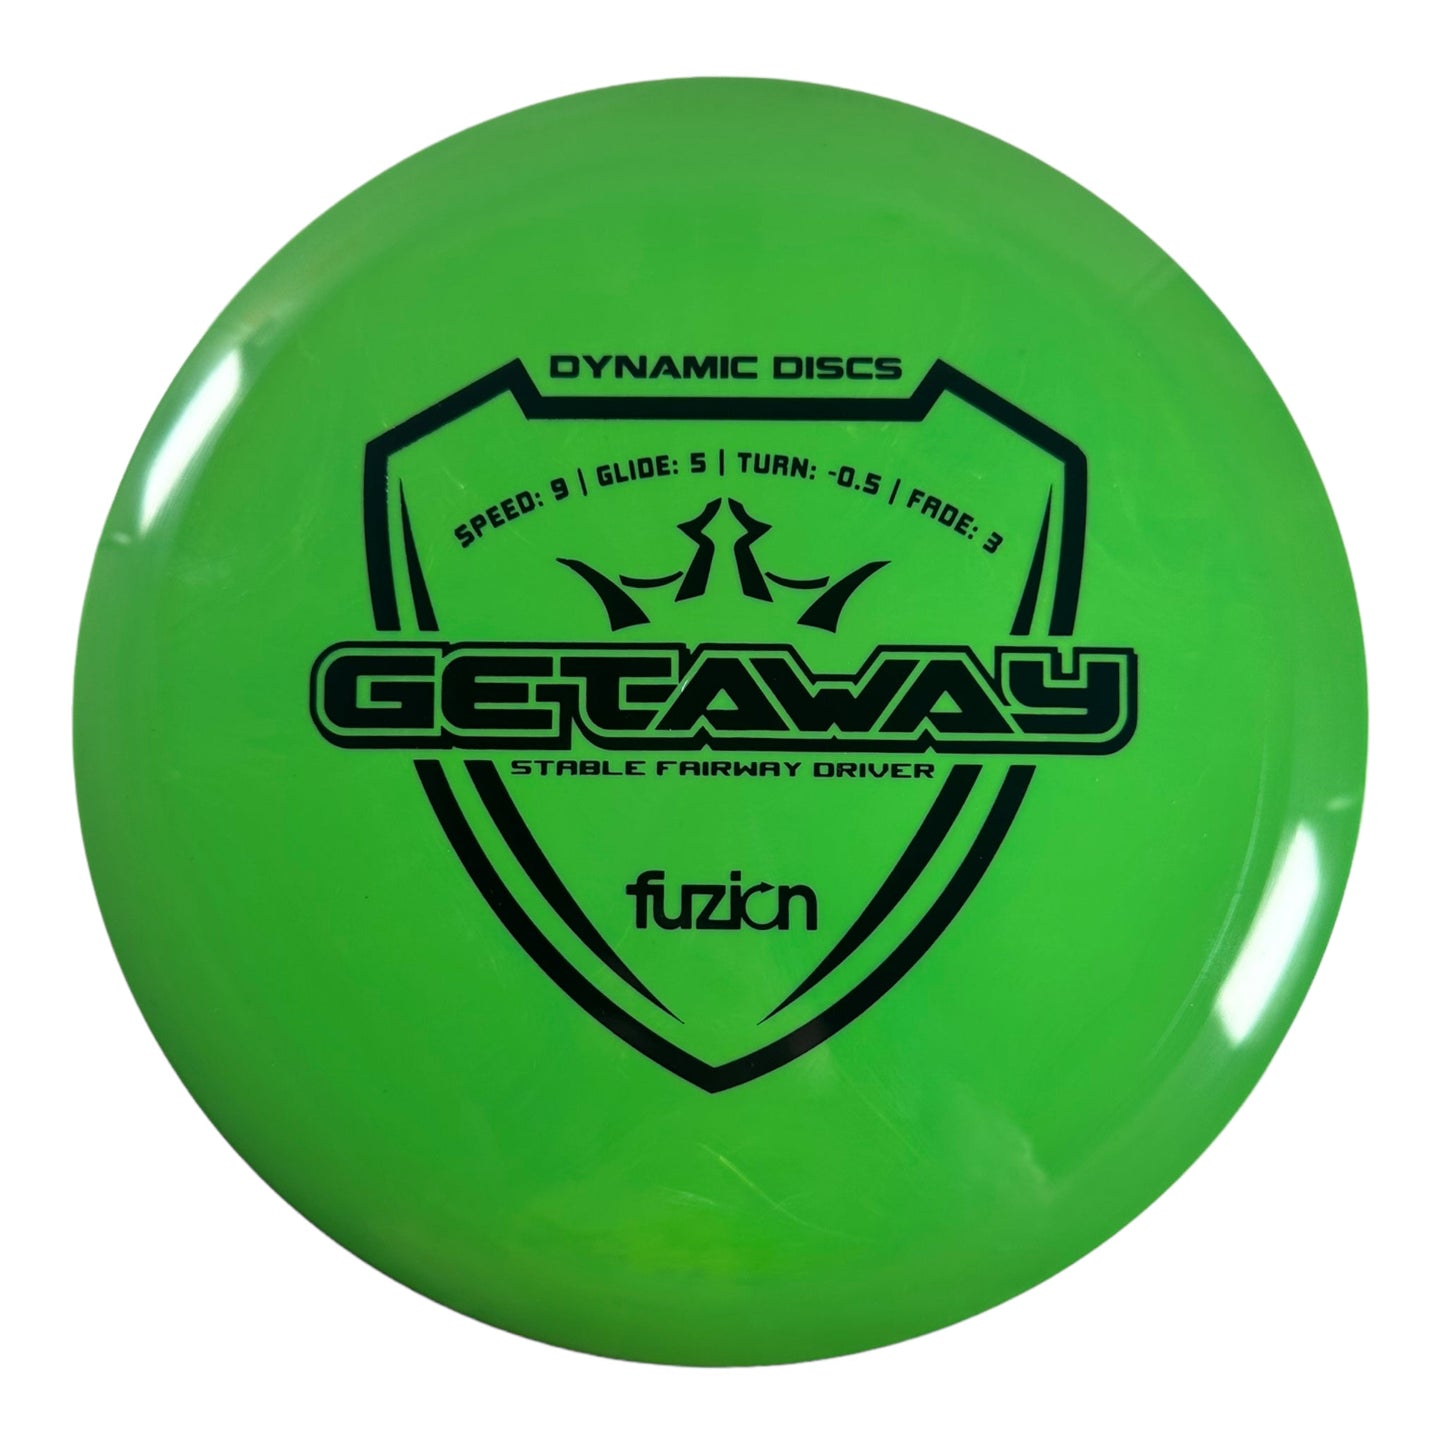 Dynamic Discs Getaway | Fuzion | Green/Black 172g Disc Golf